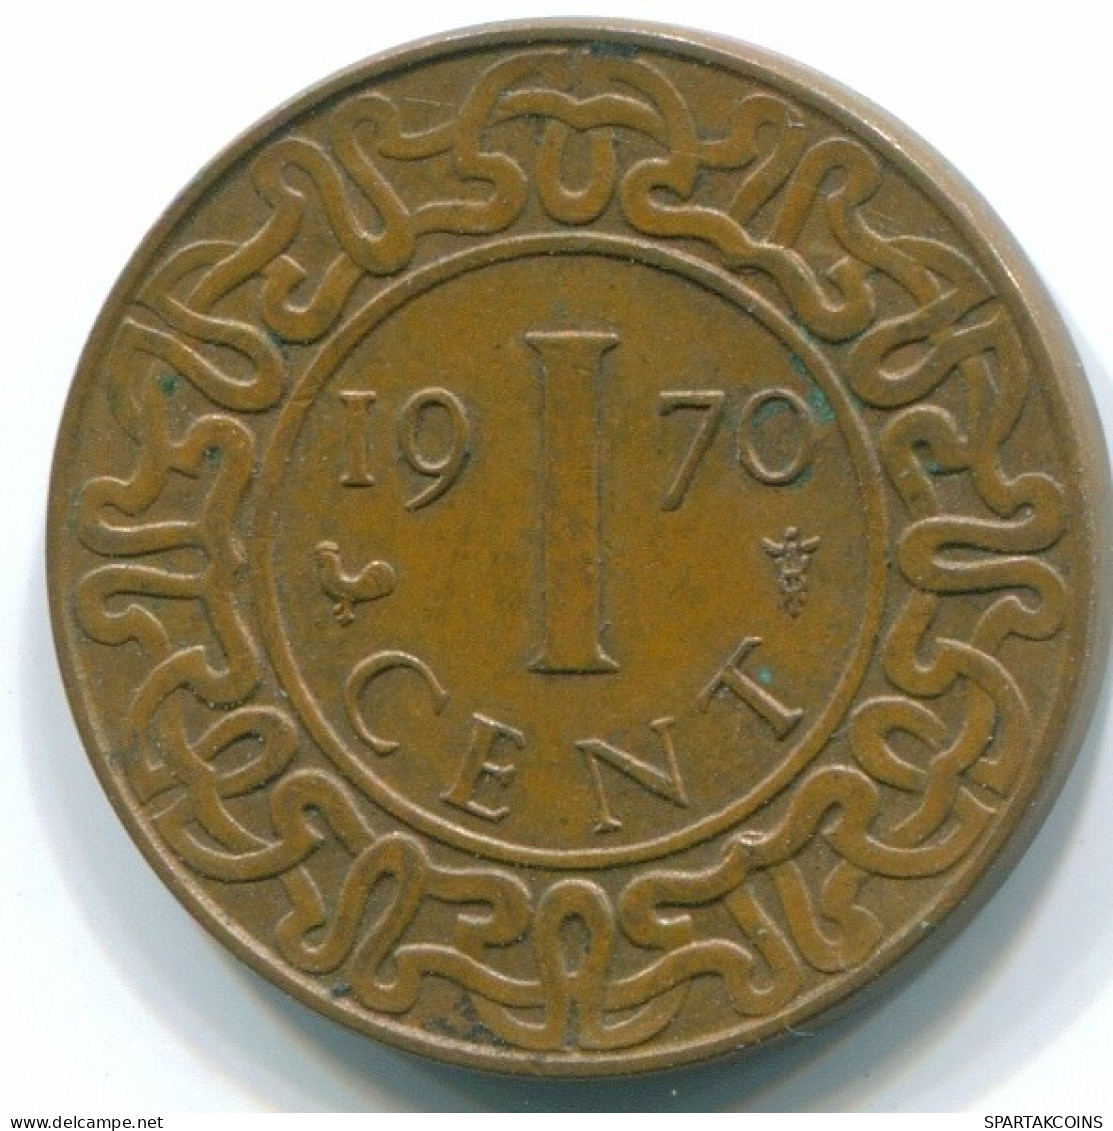 1 CENT 1970 SURINAME Netherlands Bronze Cock Colonial Coin #S10974.U.A - Surinam 1975 - ...